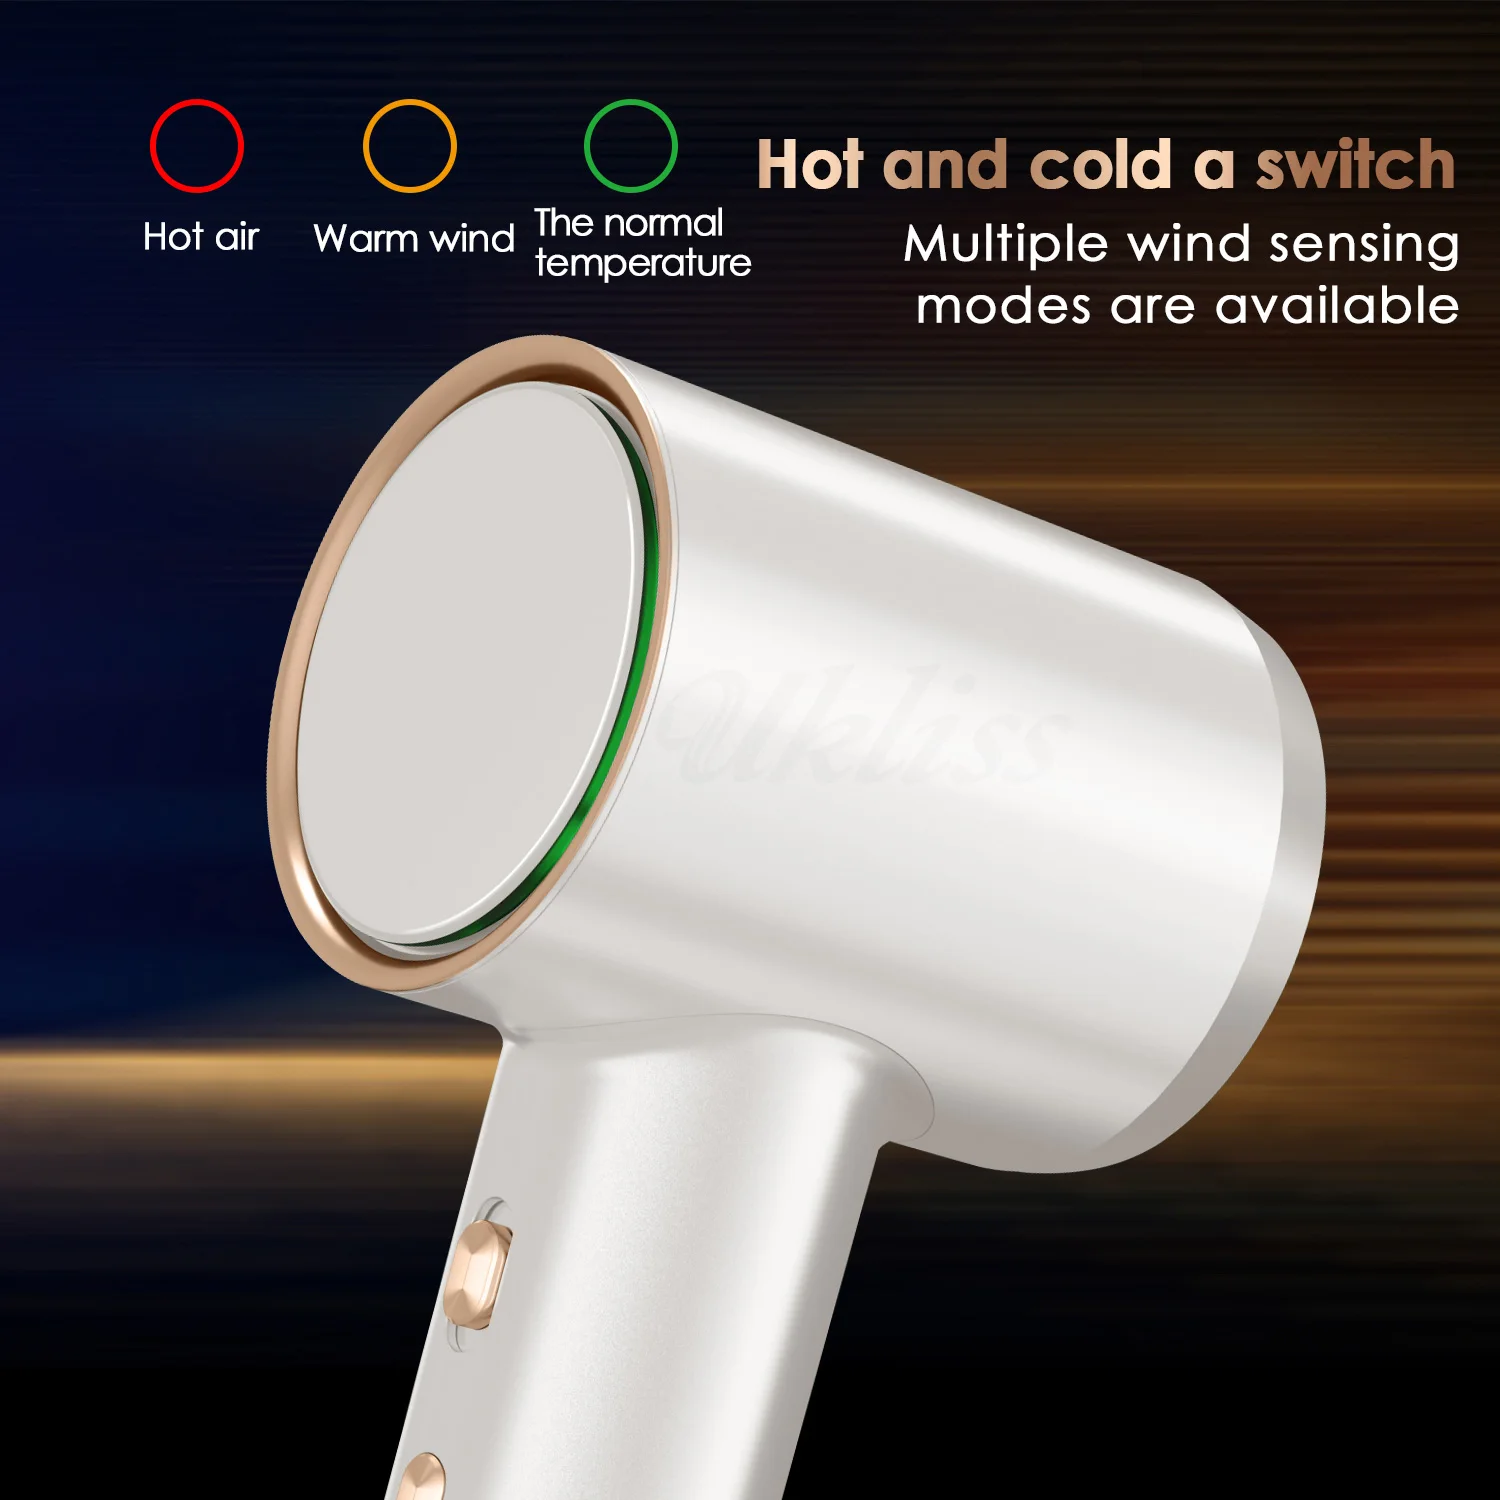 110000 RPM Hair Dryer 1600W Negative Ion Function 4 Models Intelligent Temperature Air Blower Hair Blower High Speed Hair Dryers enlarge